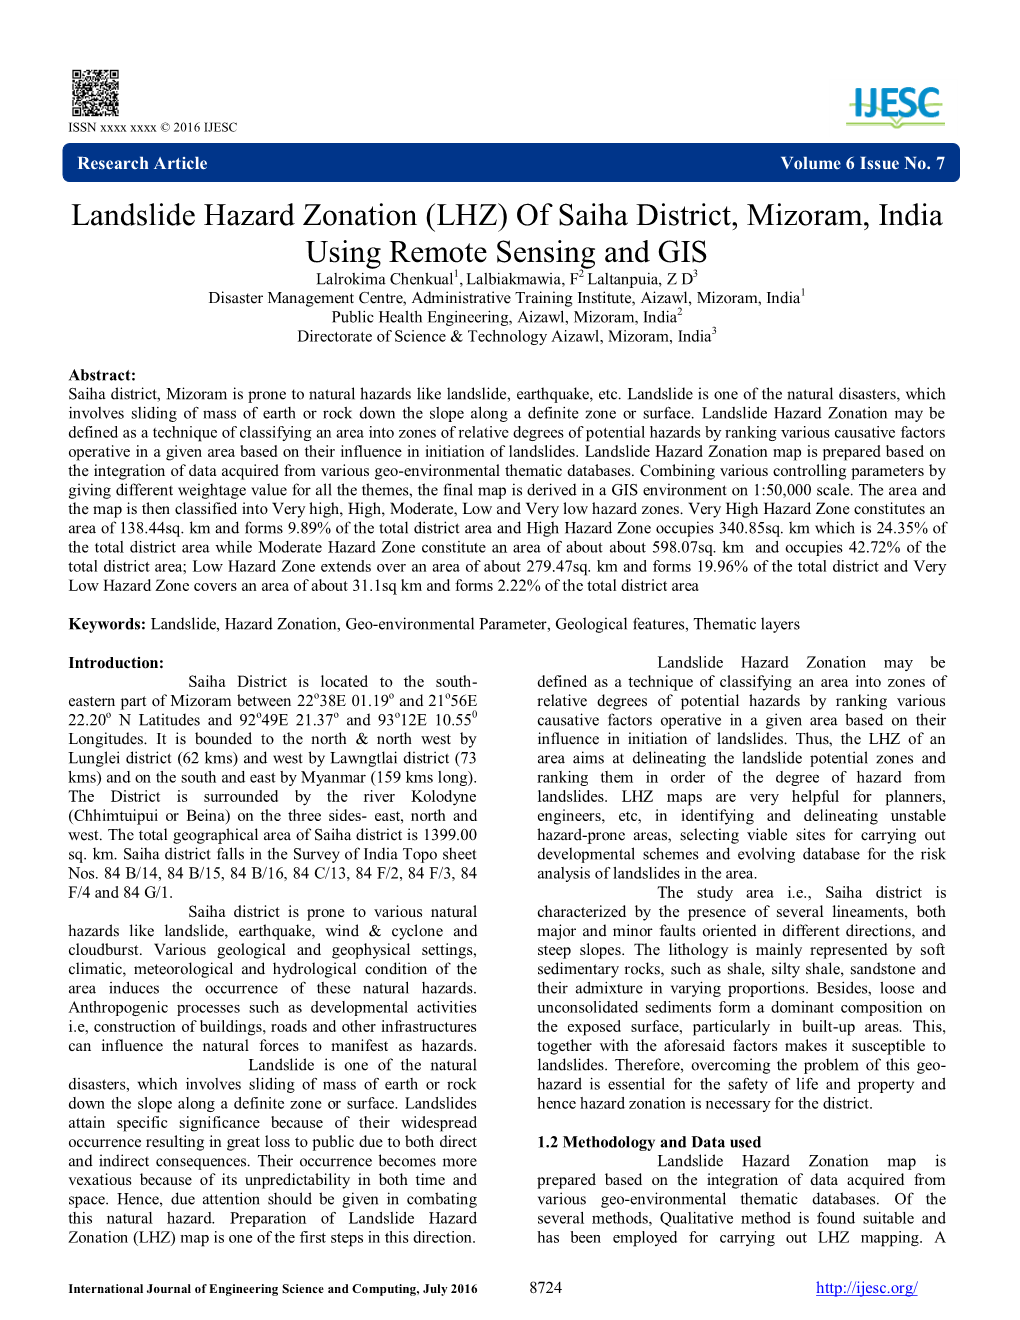 Landslide Hazard Zonation (LHZ) of Saiha District, Mizoram, India Using